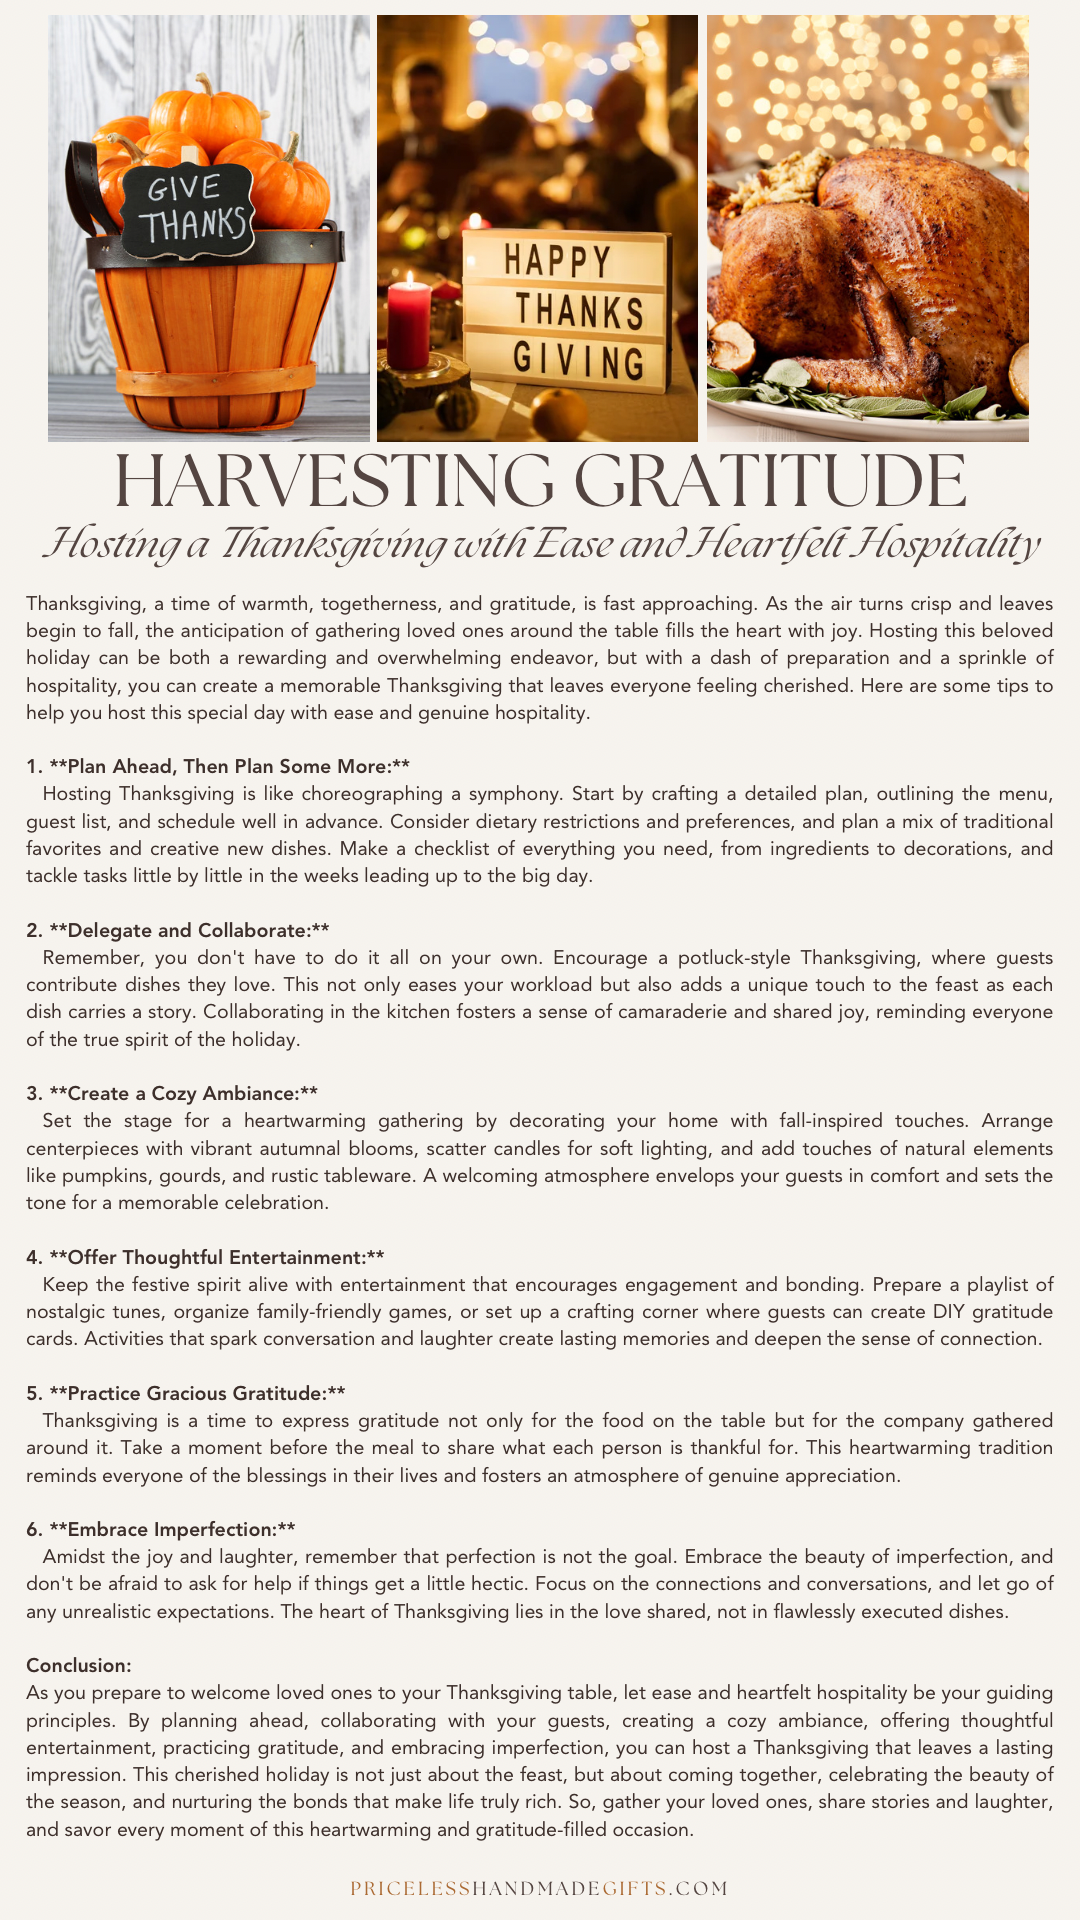 Harvesting Gratitude: Hosting Thanksgiving with Hospitality